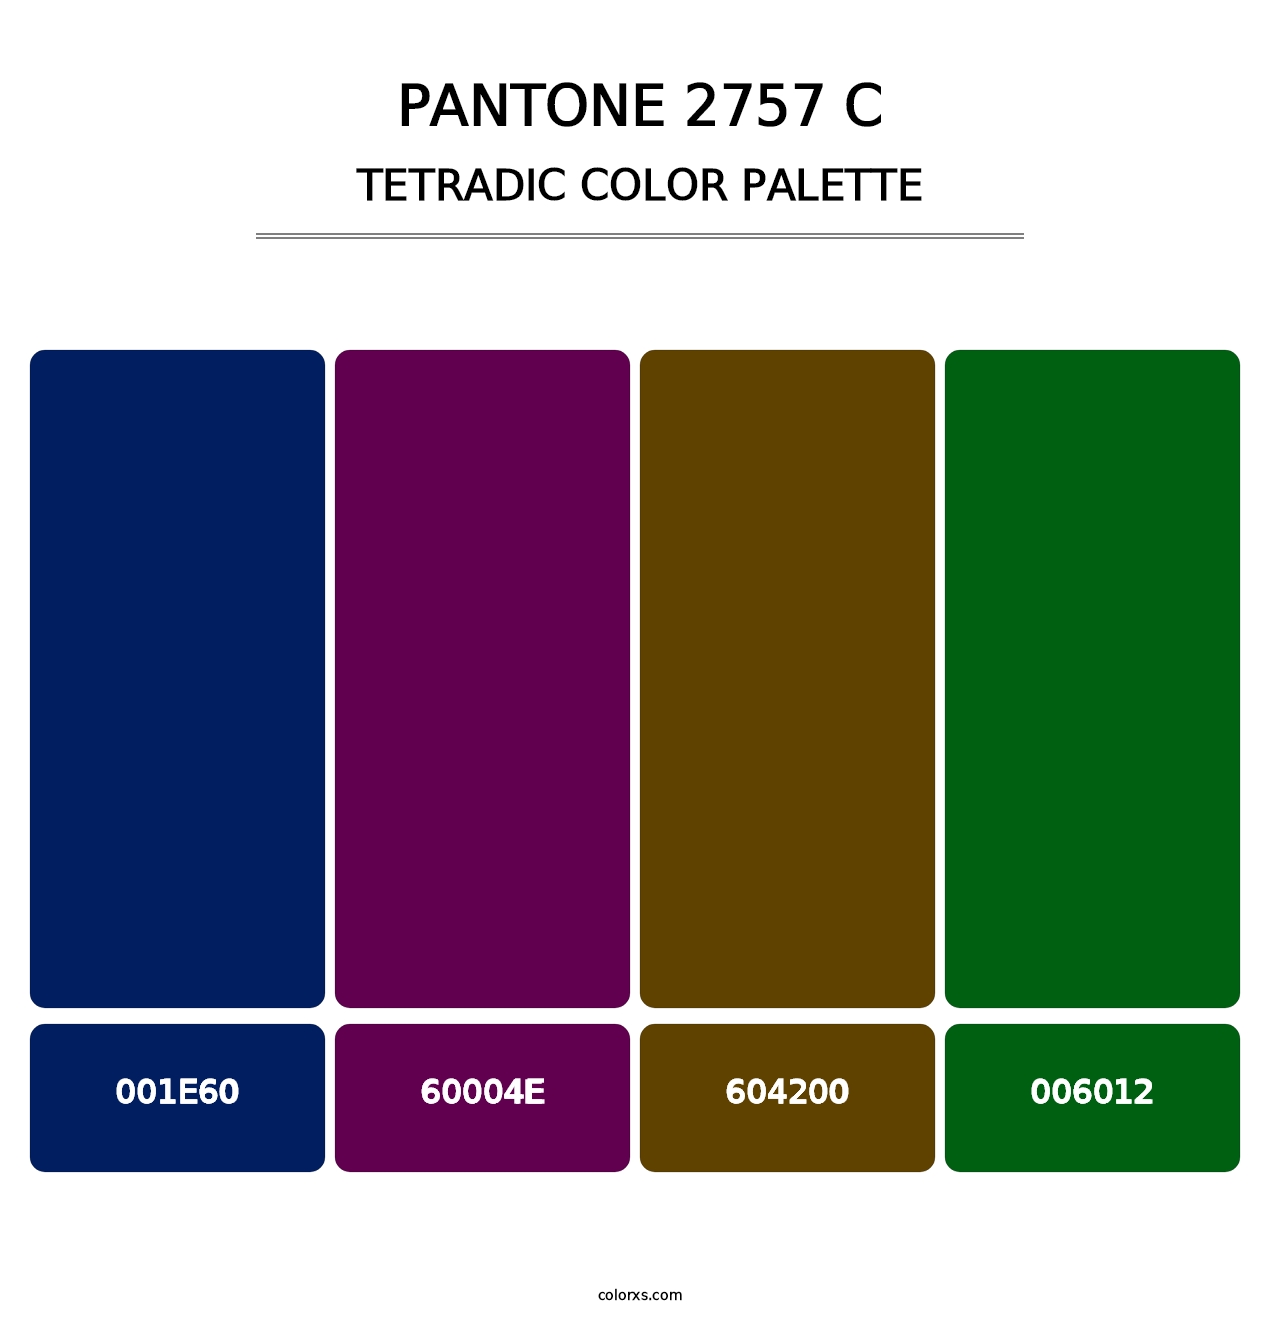 PANTONE 2757 C - Tetradic Color Palette